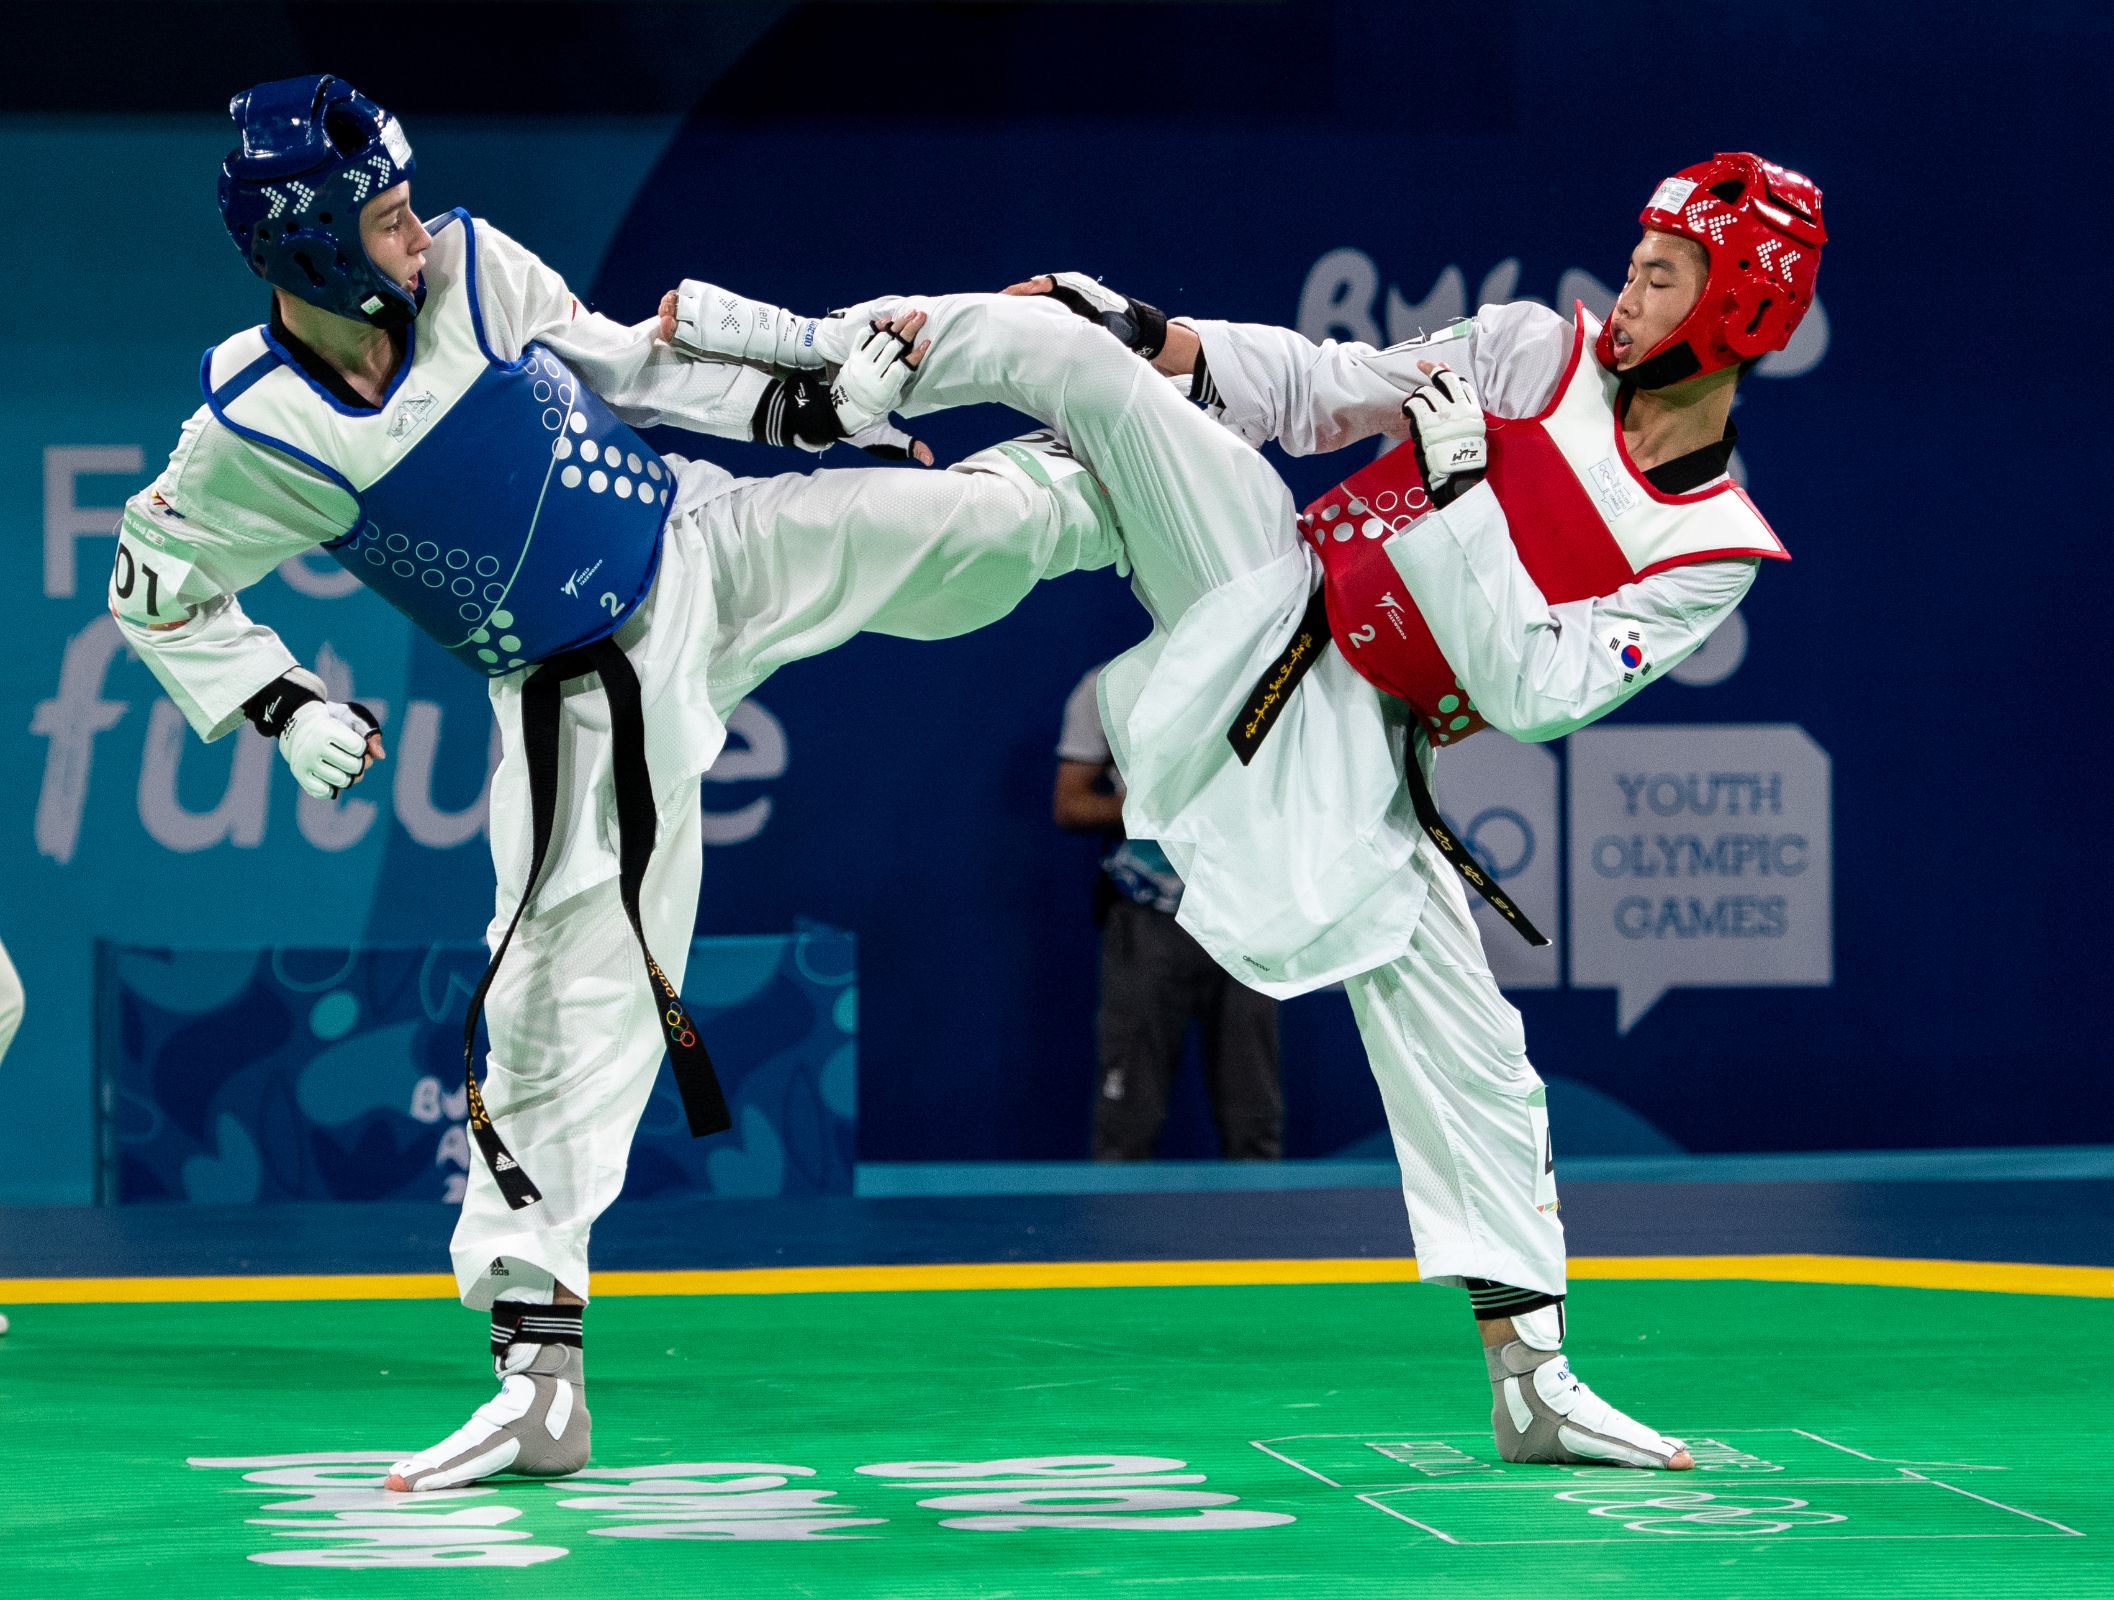 Taekwondo Martial Art - Rules & Techniques | Sportz Craazy